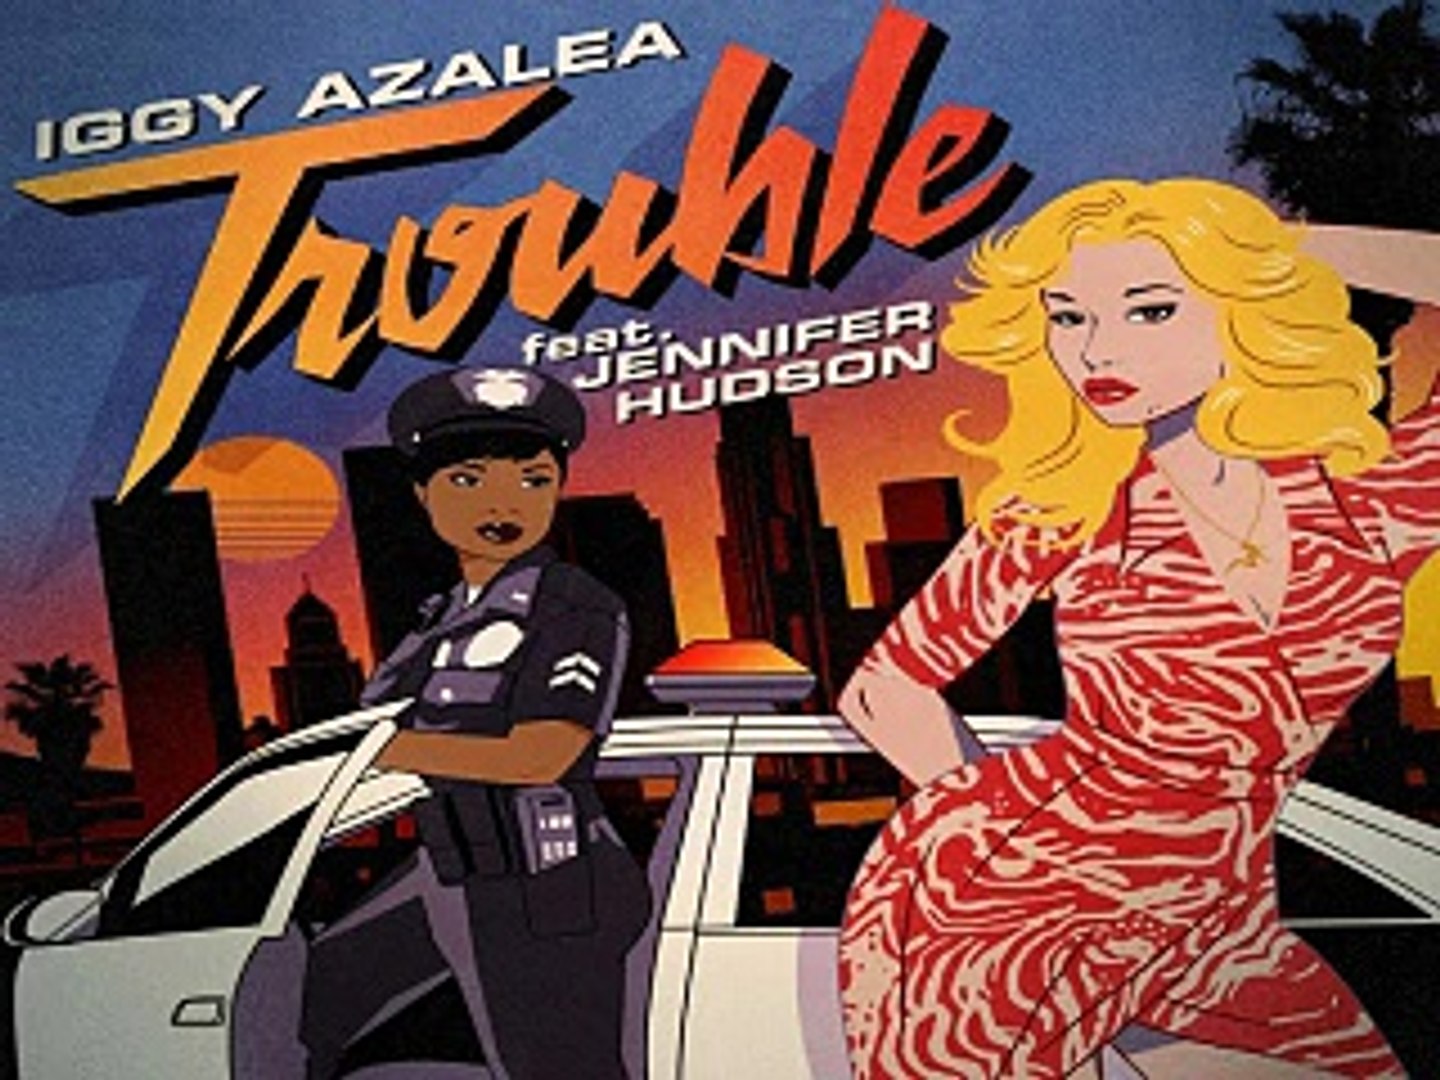 DOWNLOAD MP3 ] Iggy Azalea - Trouble (feat. Jennifer Hudson) [Explicit] [  iTunesRip ] - video Dailymotion